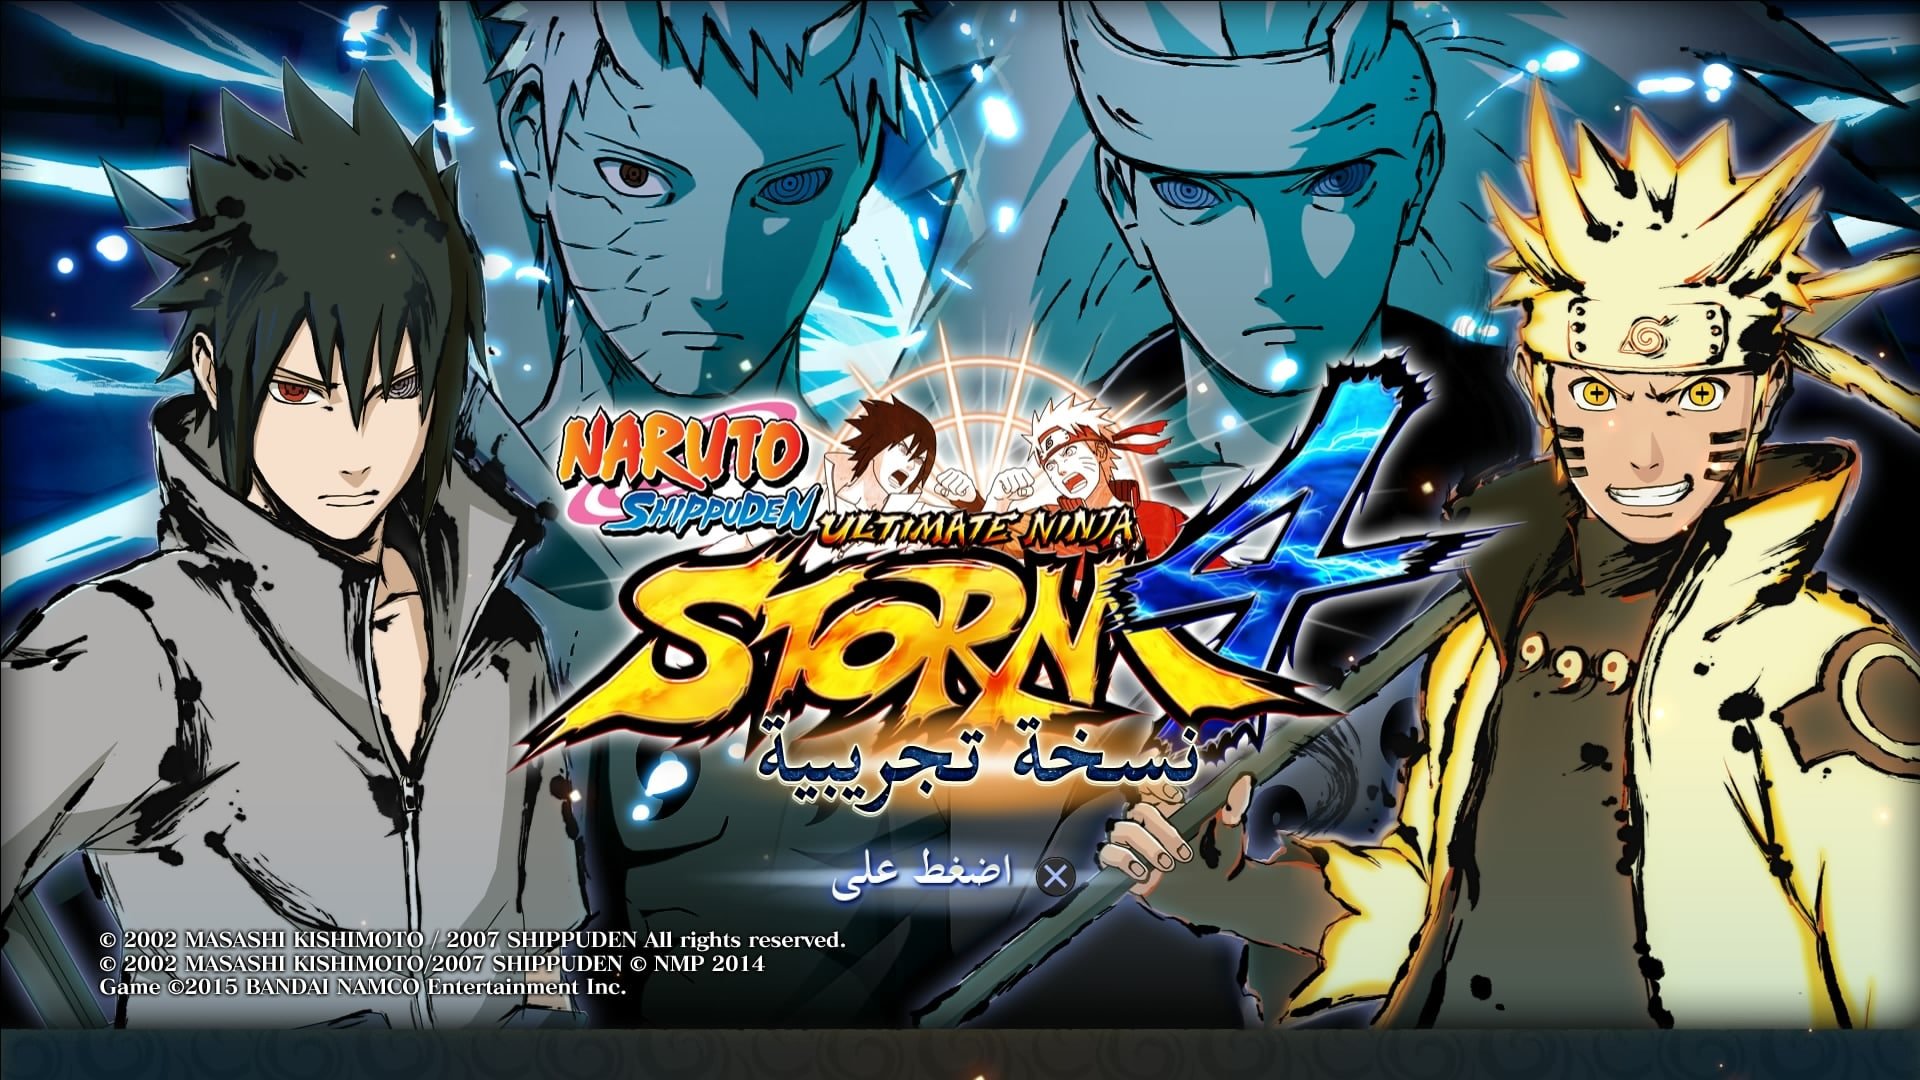 Naruto Shippuden: Ultimate Ninja Storm 4 Road to Boruto DLC Gameplay Trailer